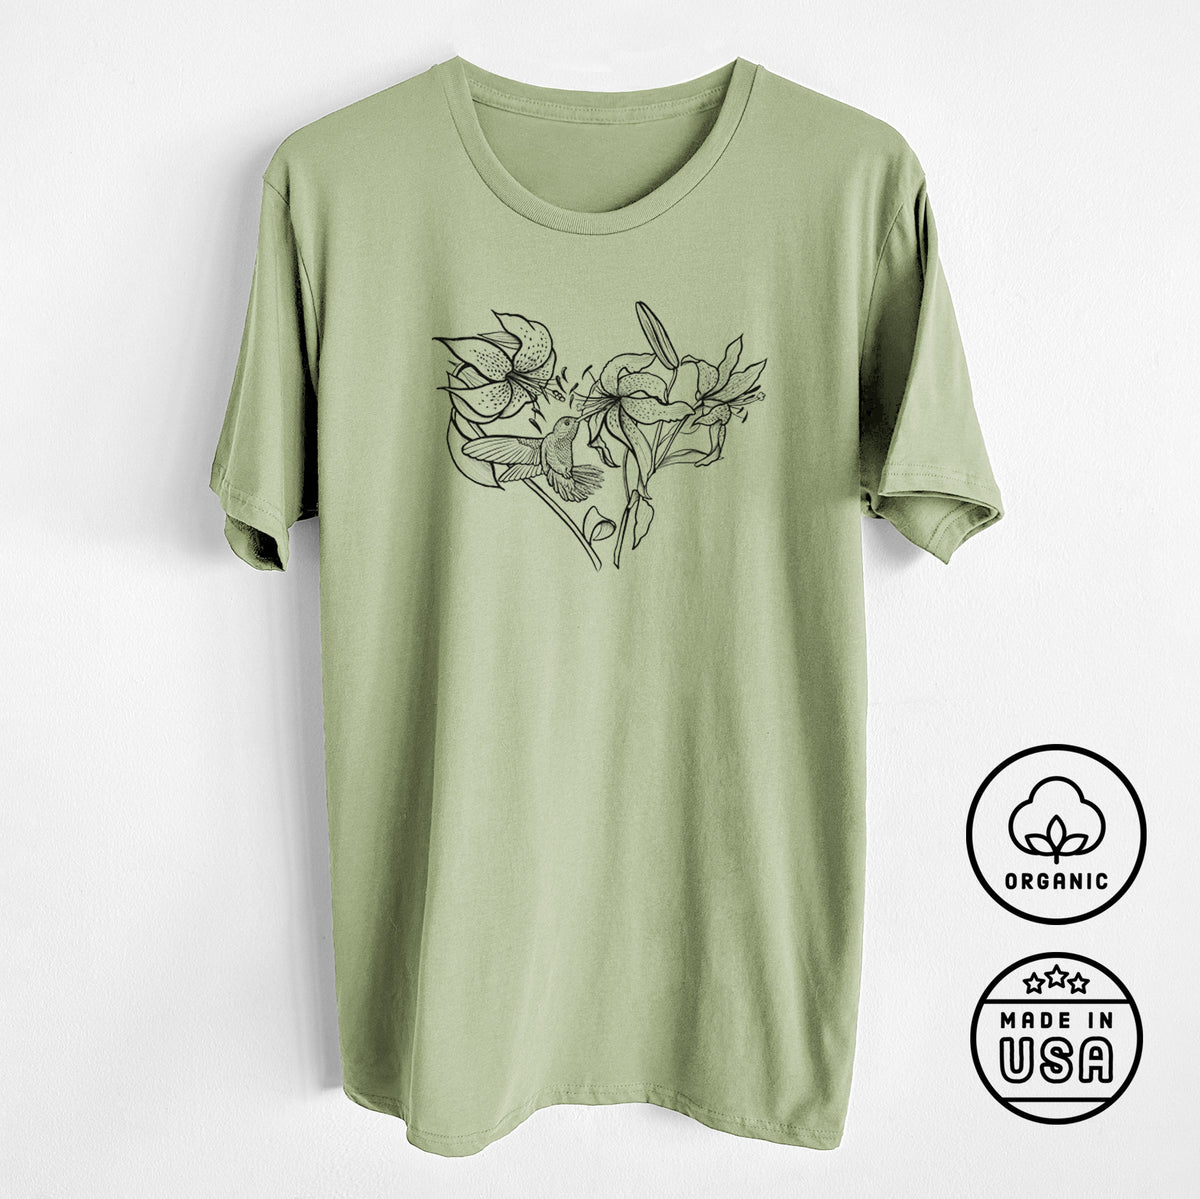 Hummingbird with Lillies Heart - Unisex Crewneck - Made in USA - 100% Organic Cotton